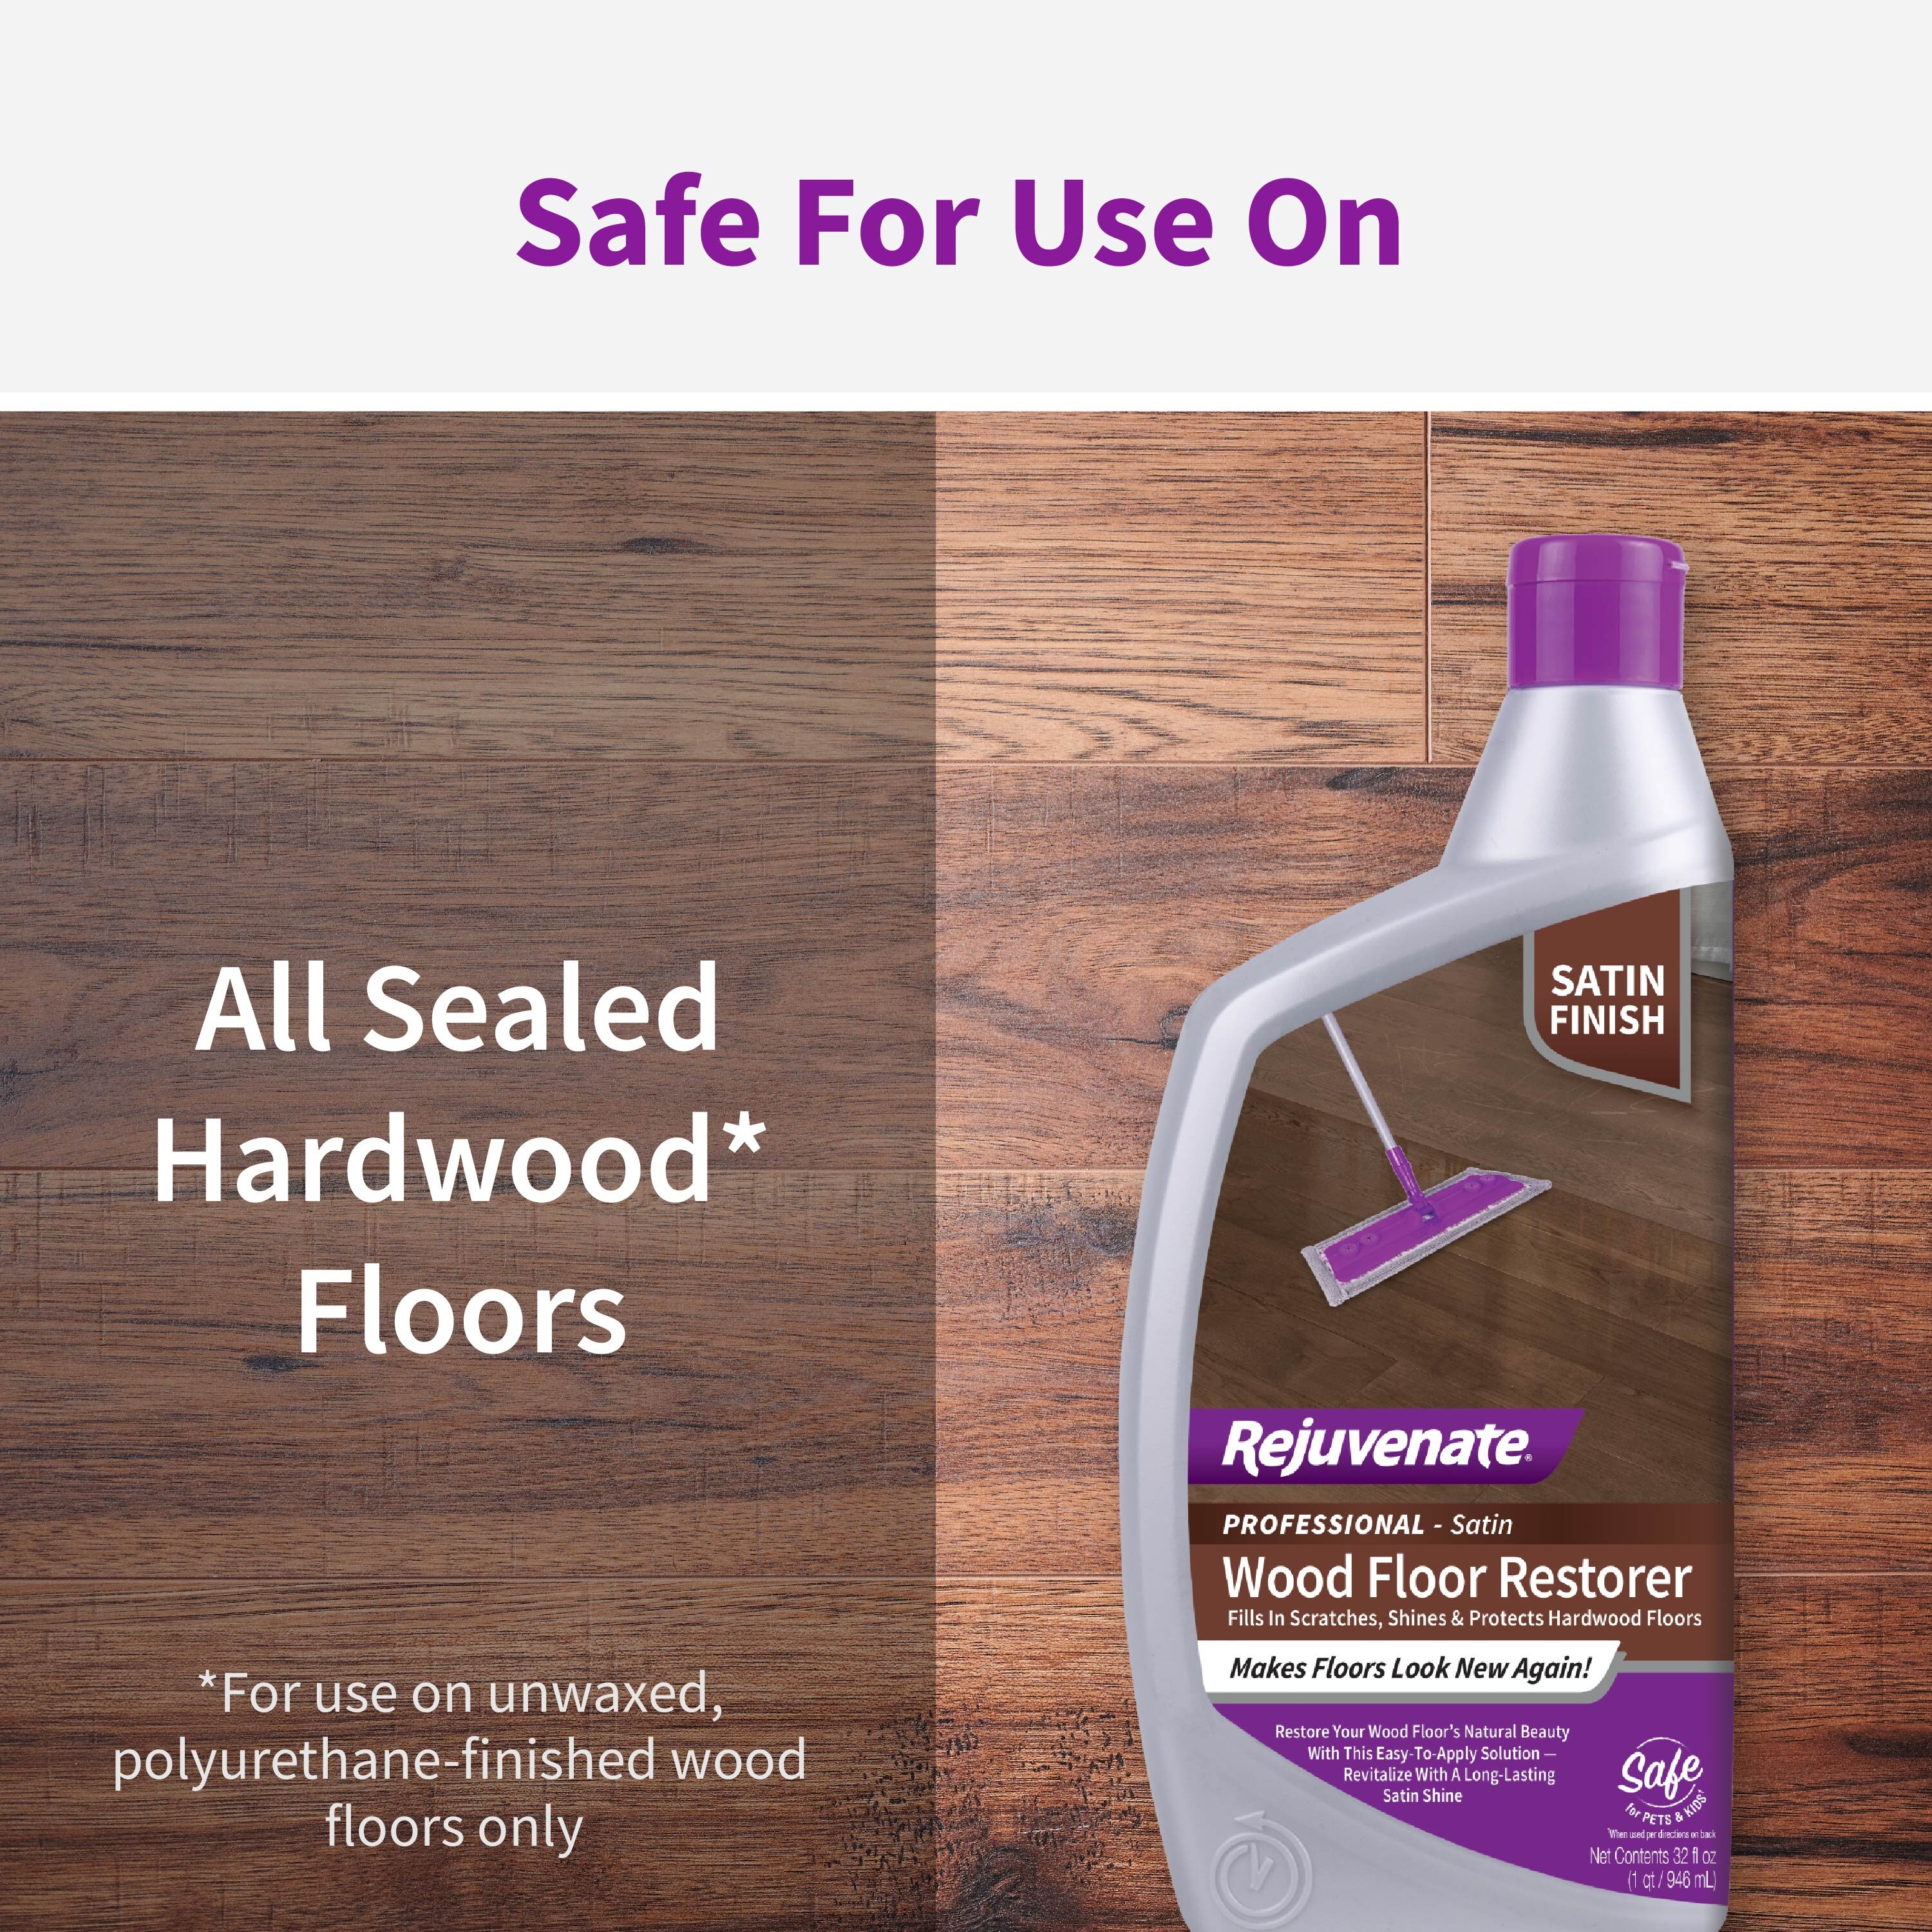 Rejuvenate Professional Wood Floor Restorer and Polish with